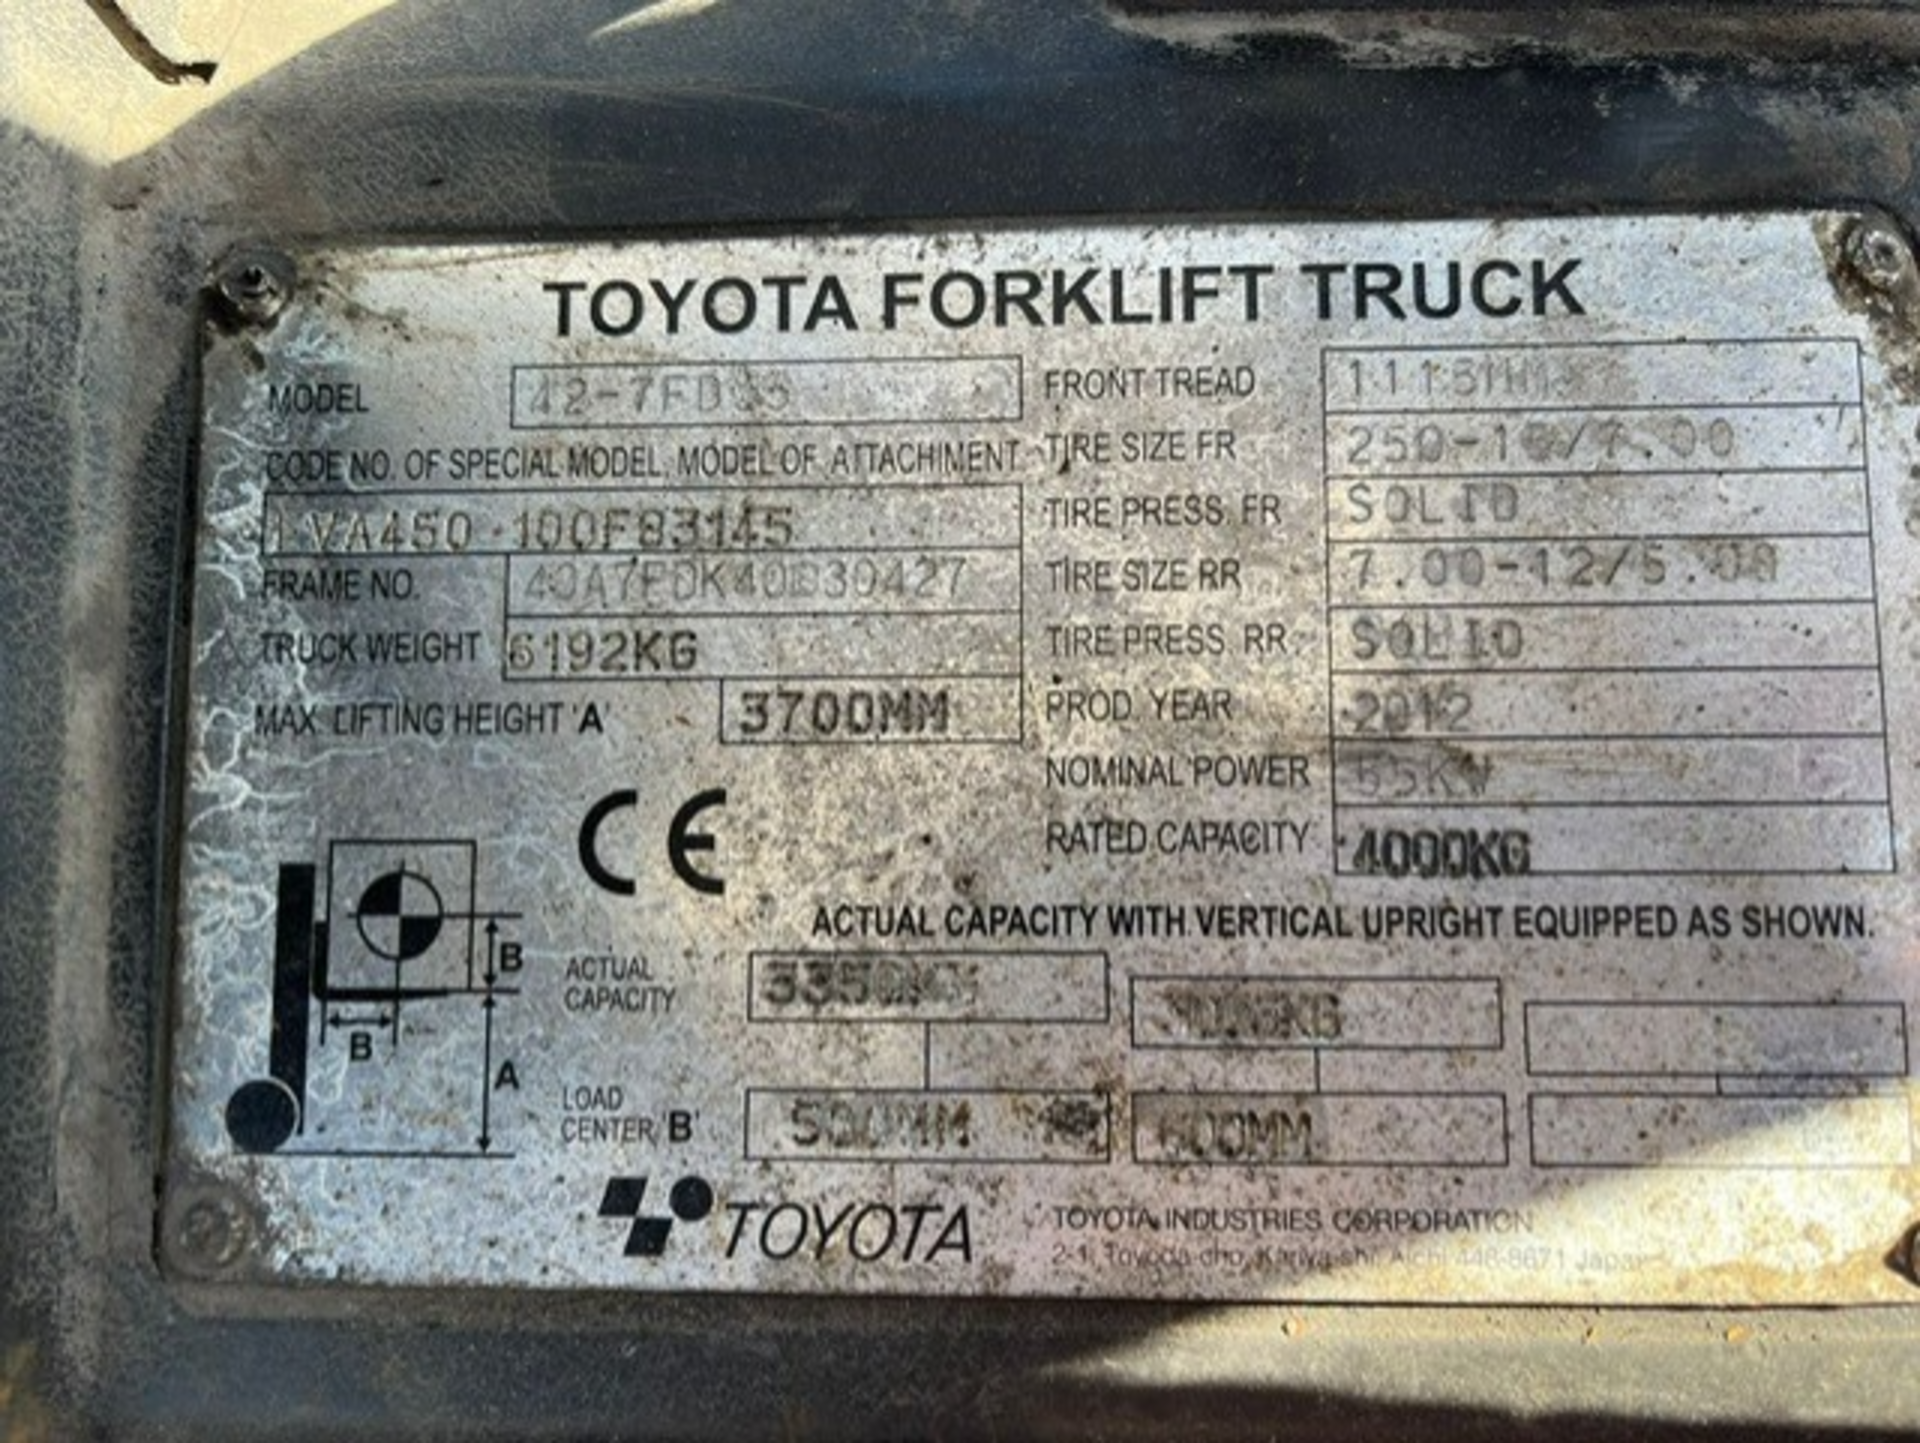 2012, TOYOTA Forklift - Image 6 of 7